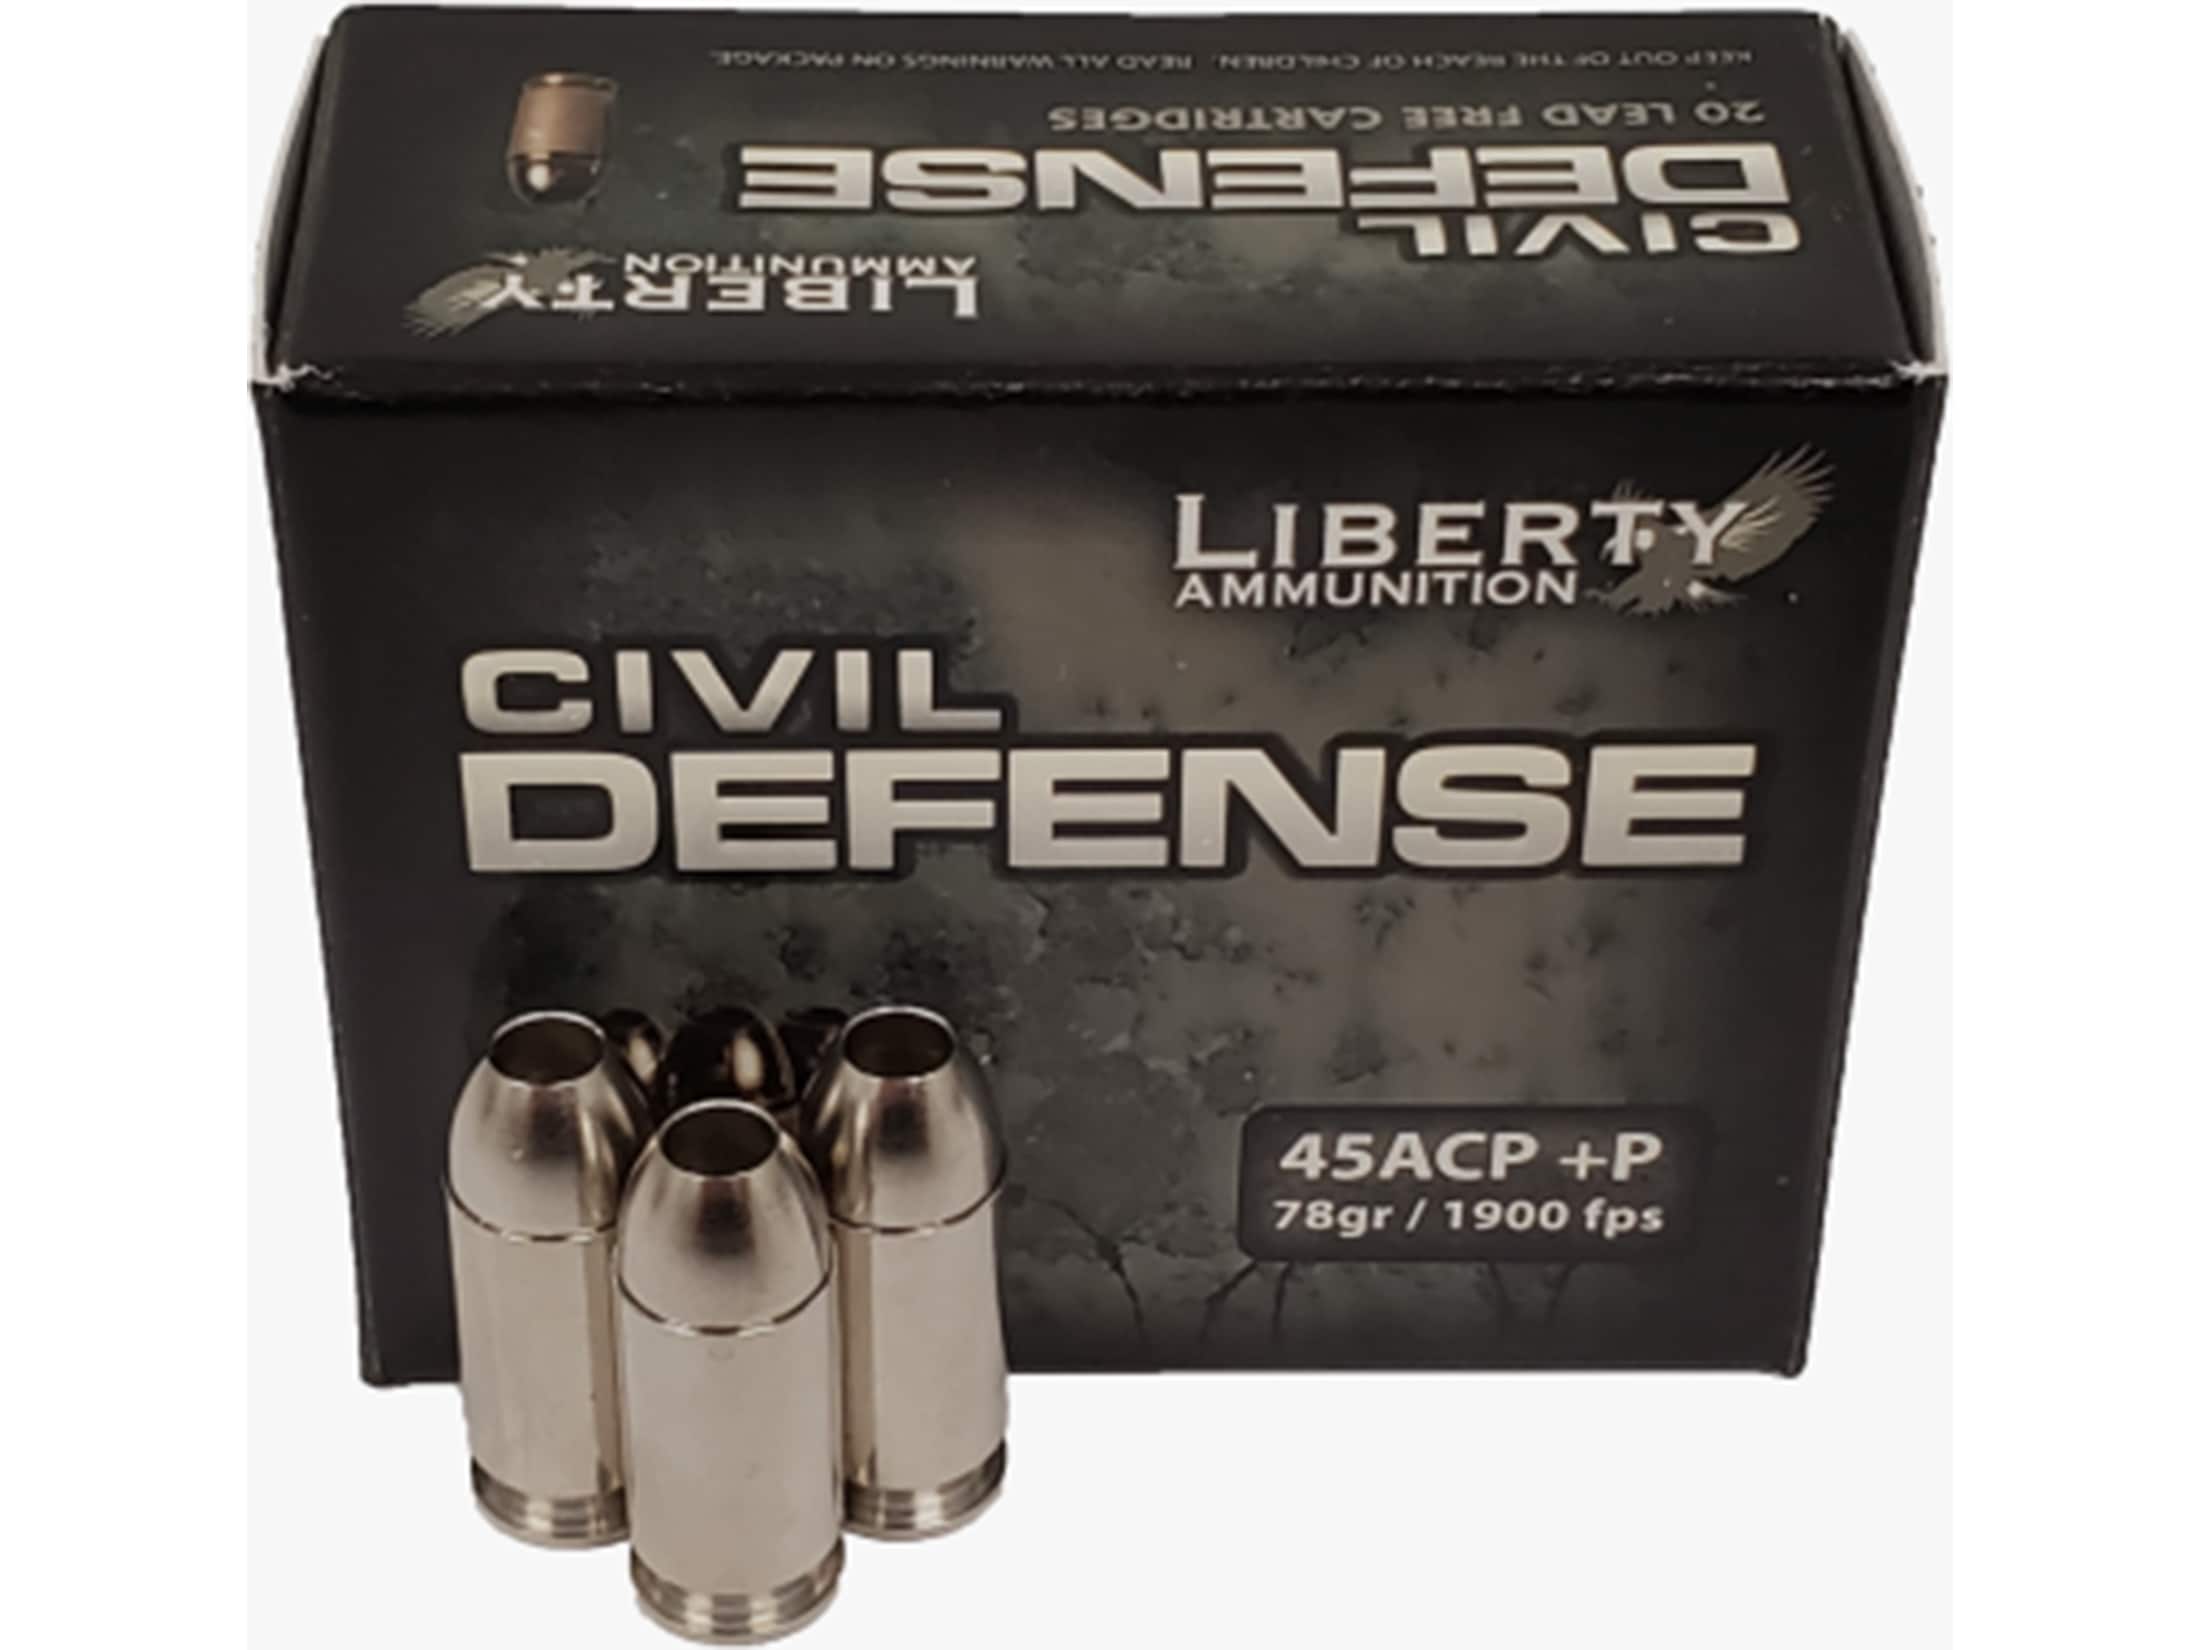 Liberty Civil Defense Ammo 45 ACP +P 78 Grain Fragmenting Hollow Point